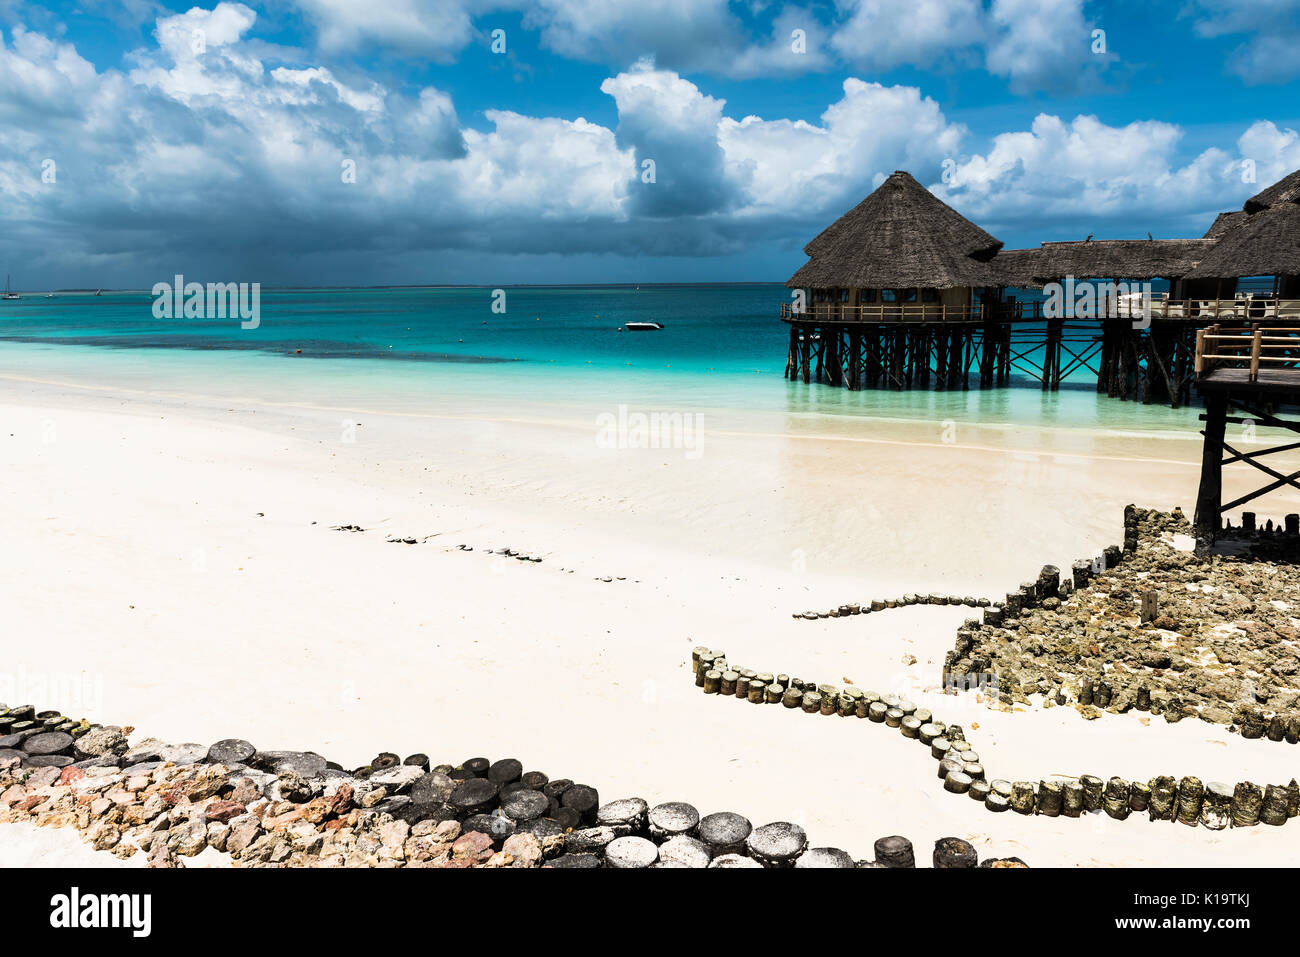 Beautiful Beach by the blue waters of the Indian ocean in Zanzibar. Zanzibar is an Island just off the coast of Tanzania - Africa. Stock Photo